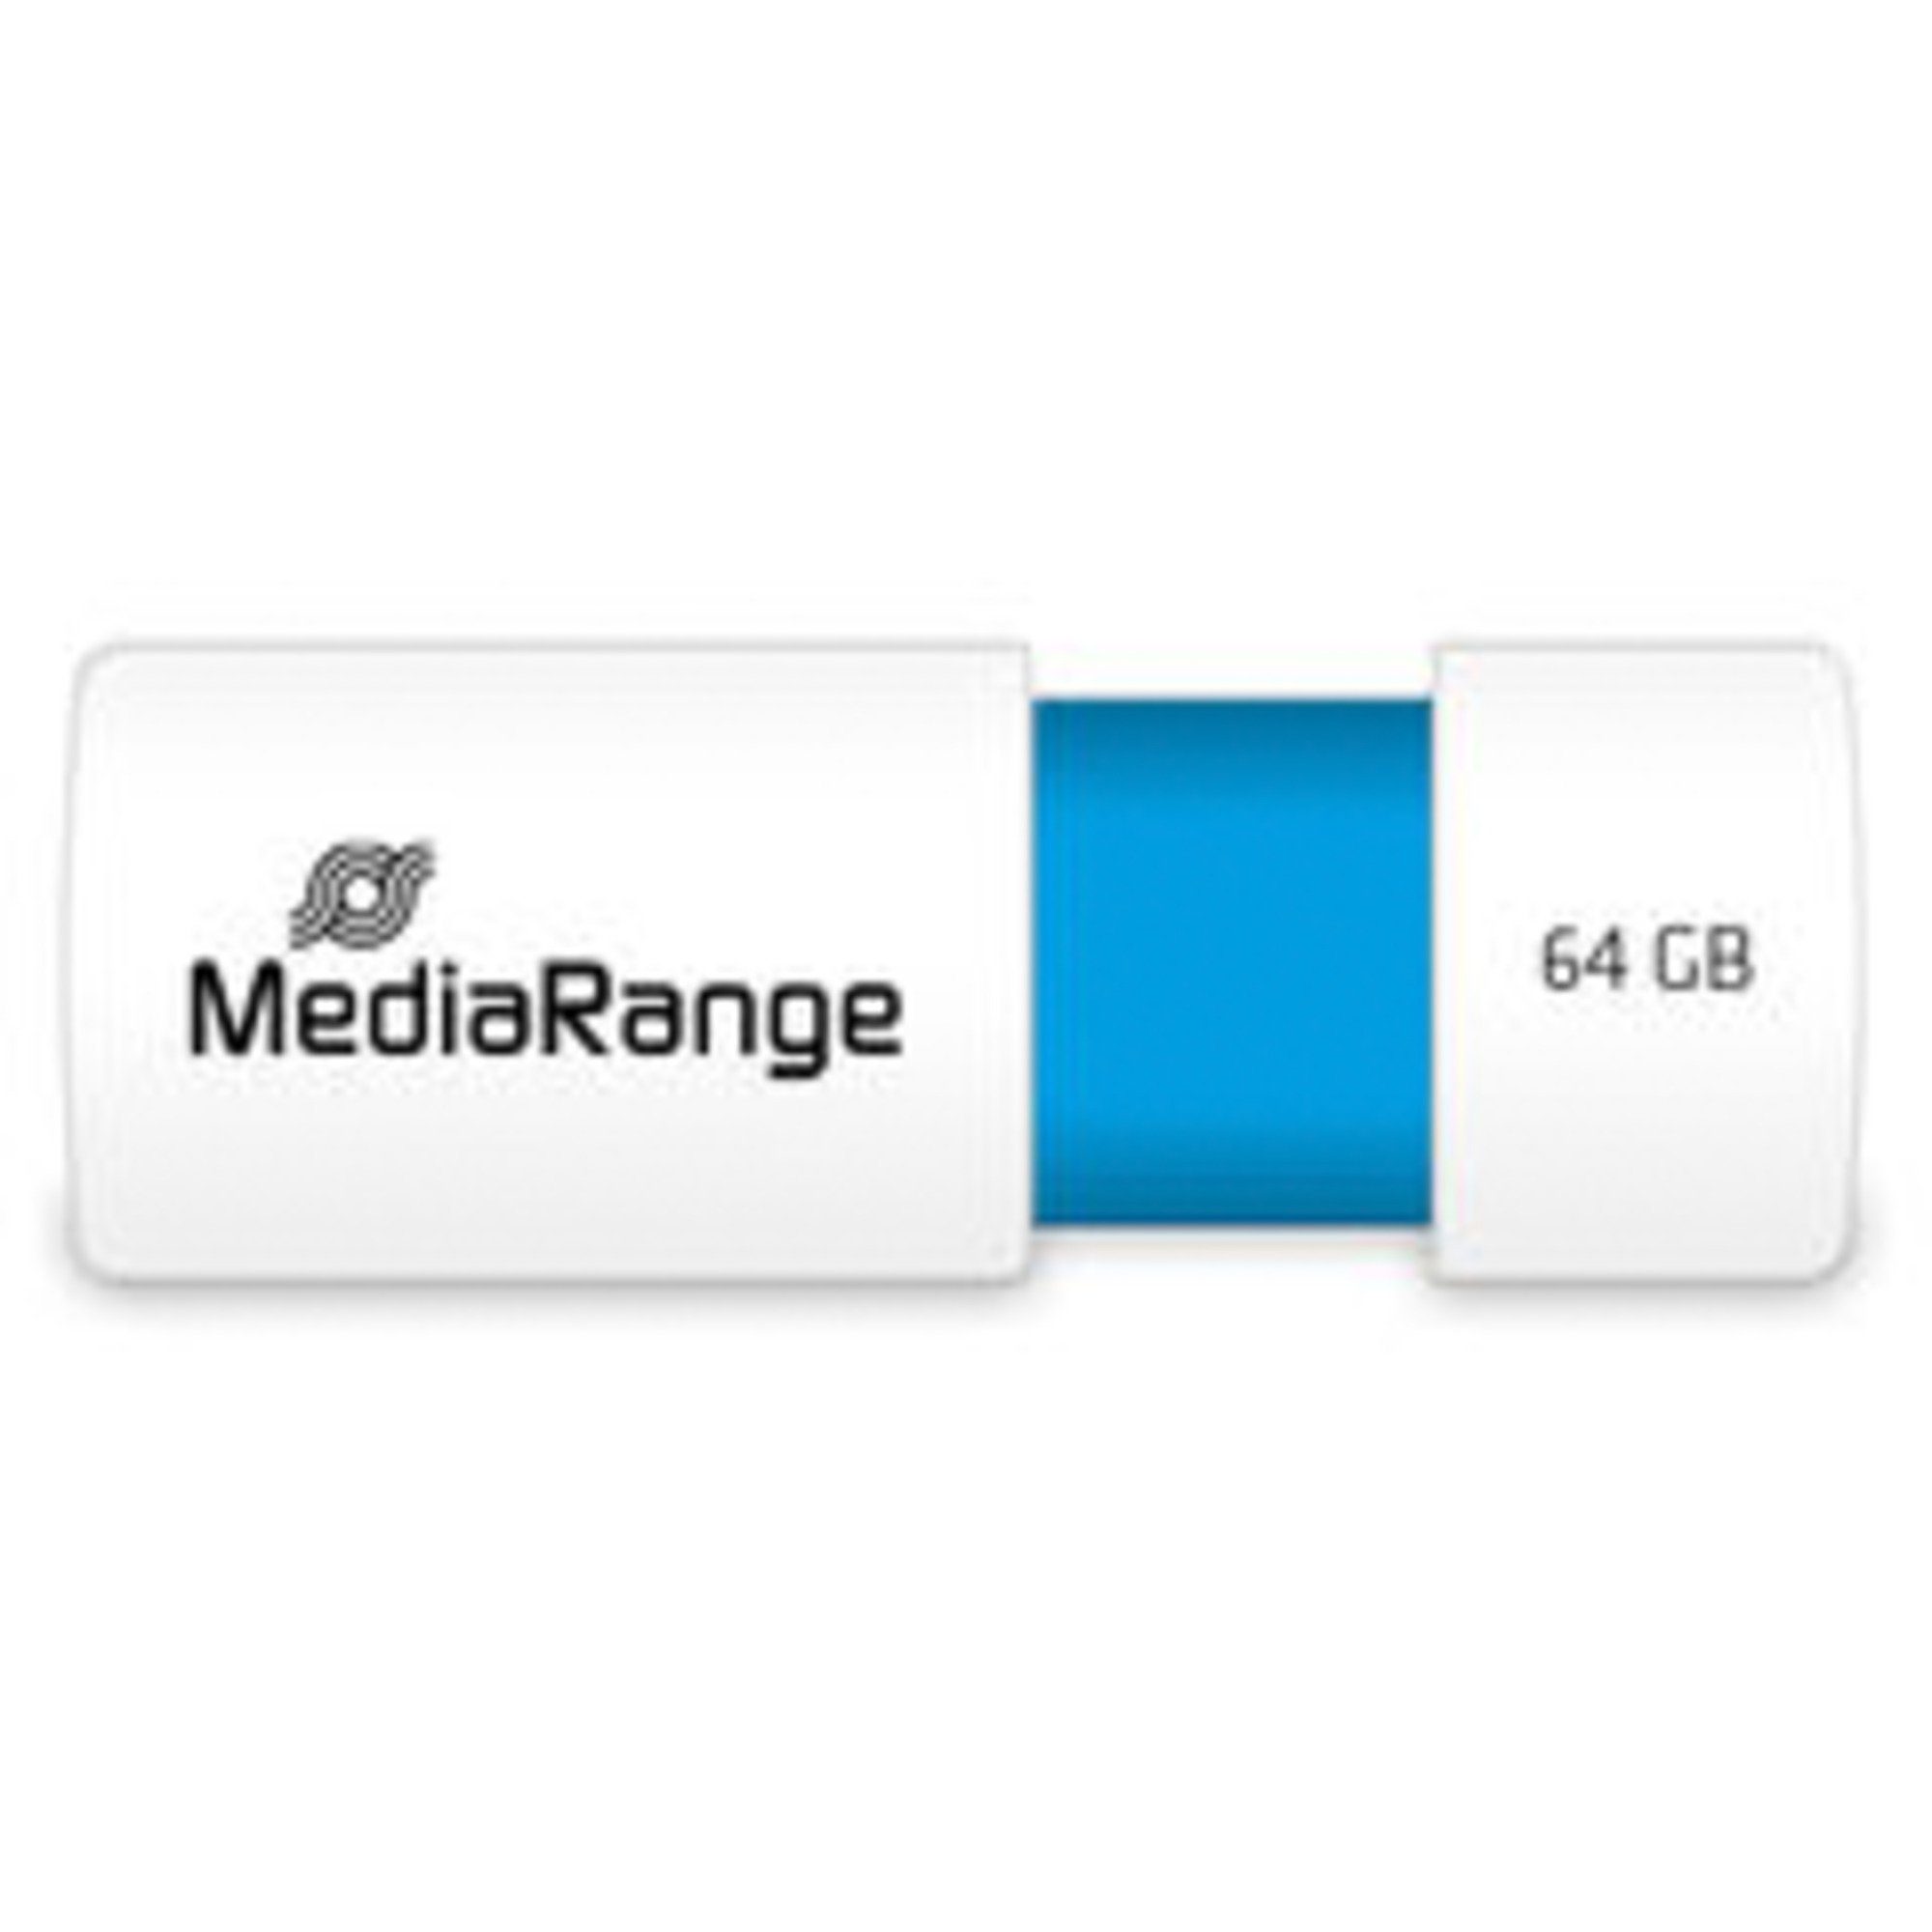 Mediarange MediaRange Color Edition 64 GB, USB-Stick, (USB-A USB-Stick